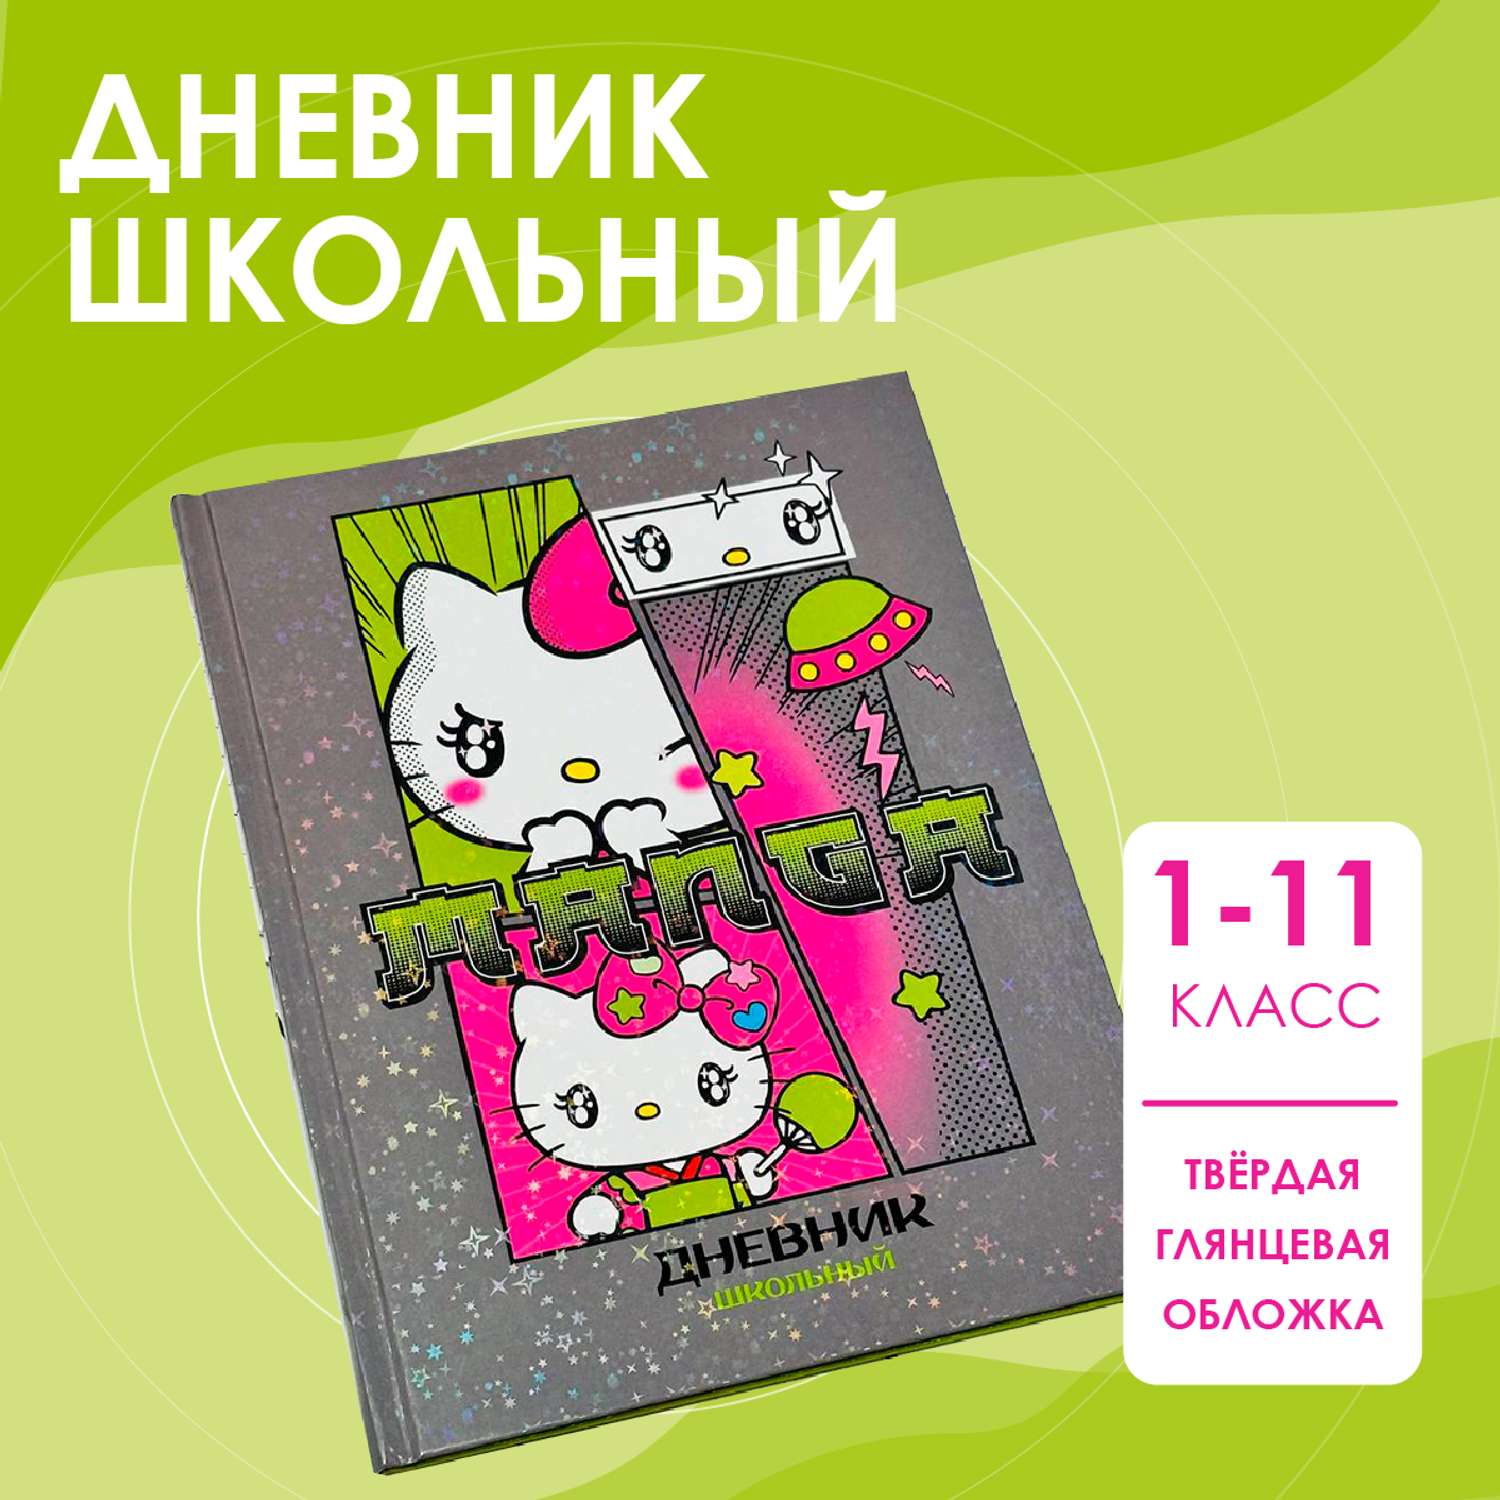 Дневник школьный CENTRUM Hello Kitty Manga - фото 1